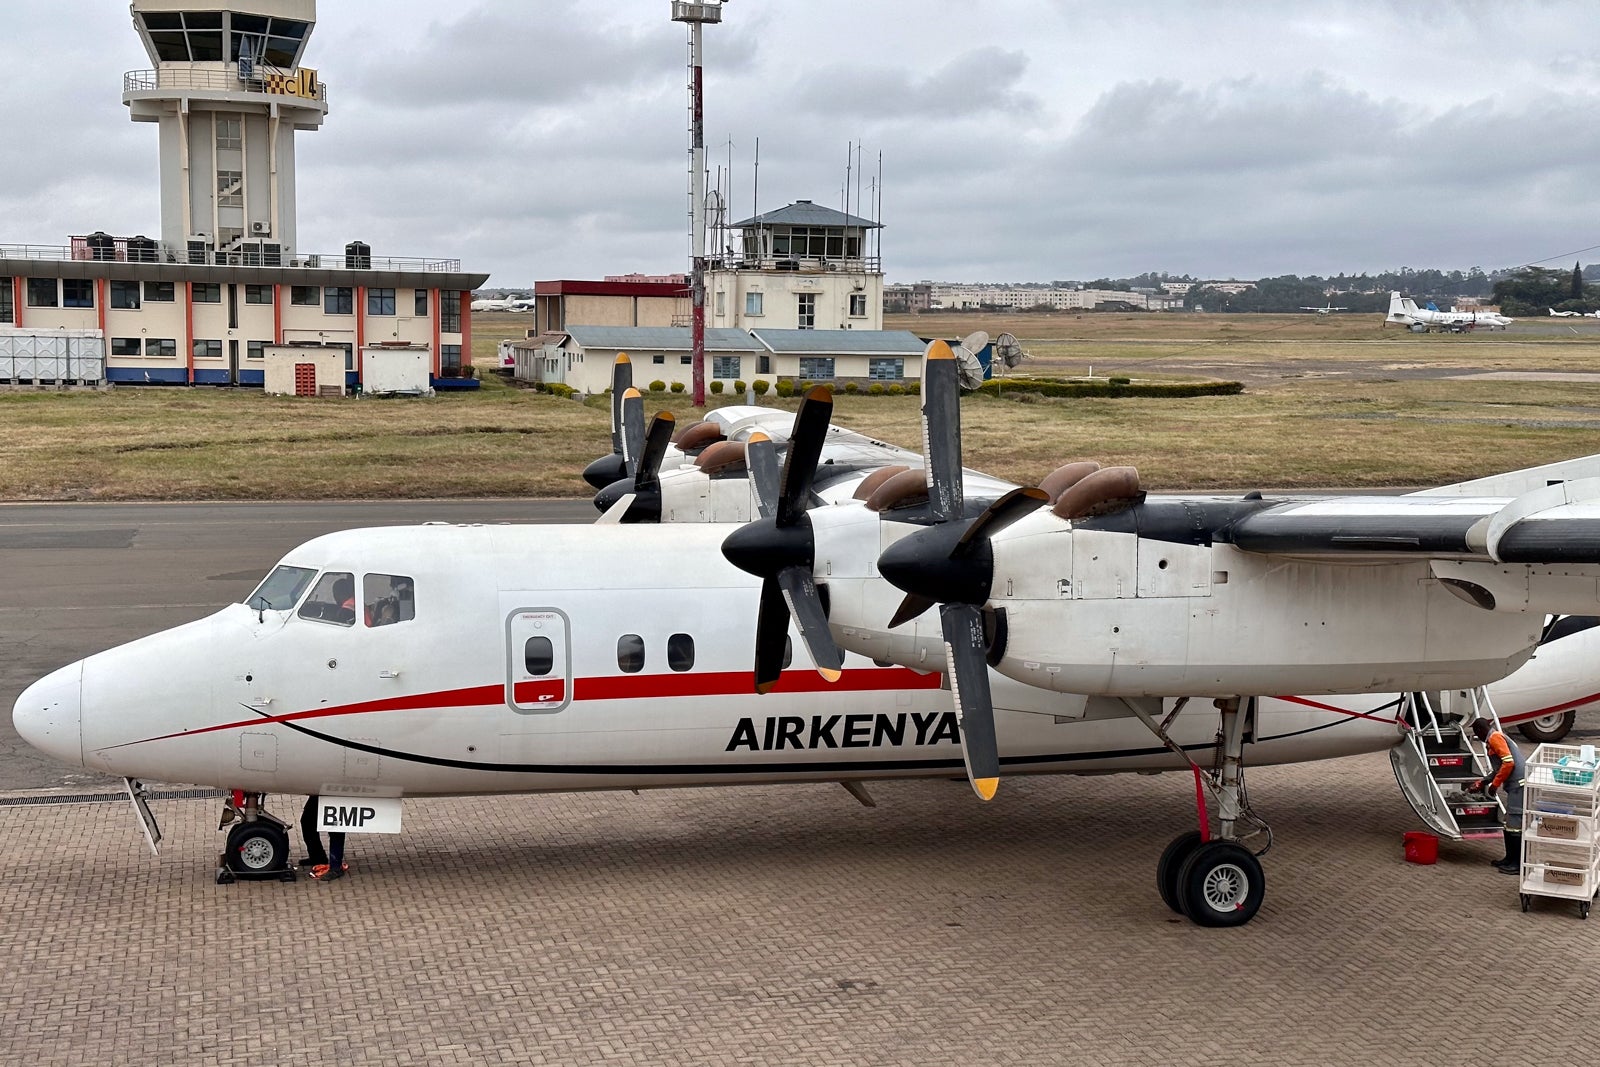 ‘Take the jumpseat’: My Kenya flights got here with an sudden AvGeek delight